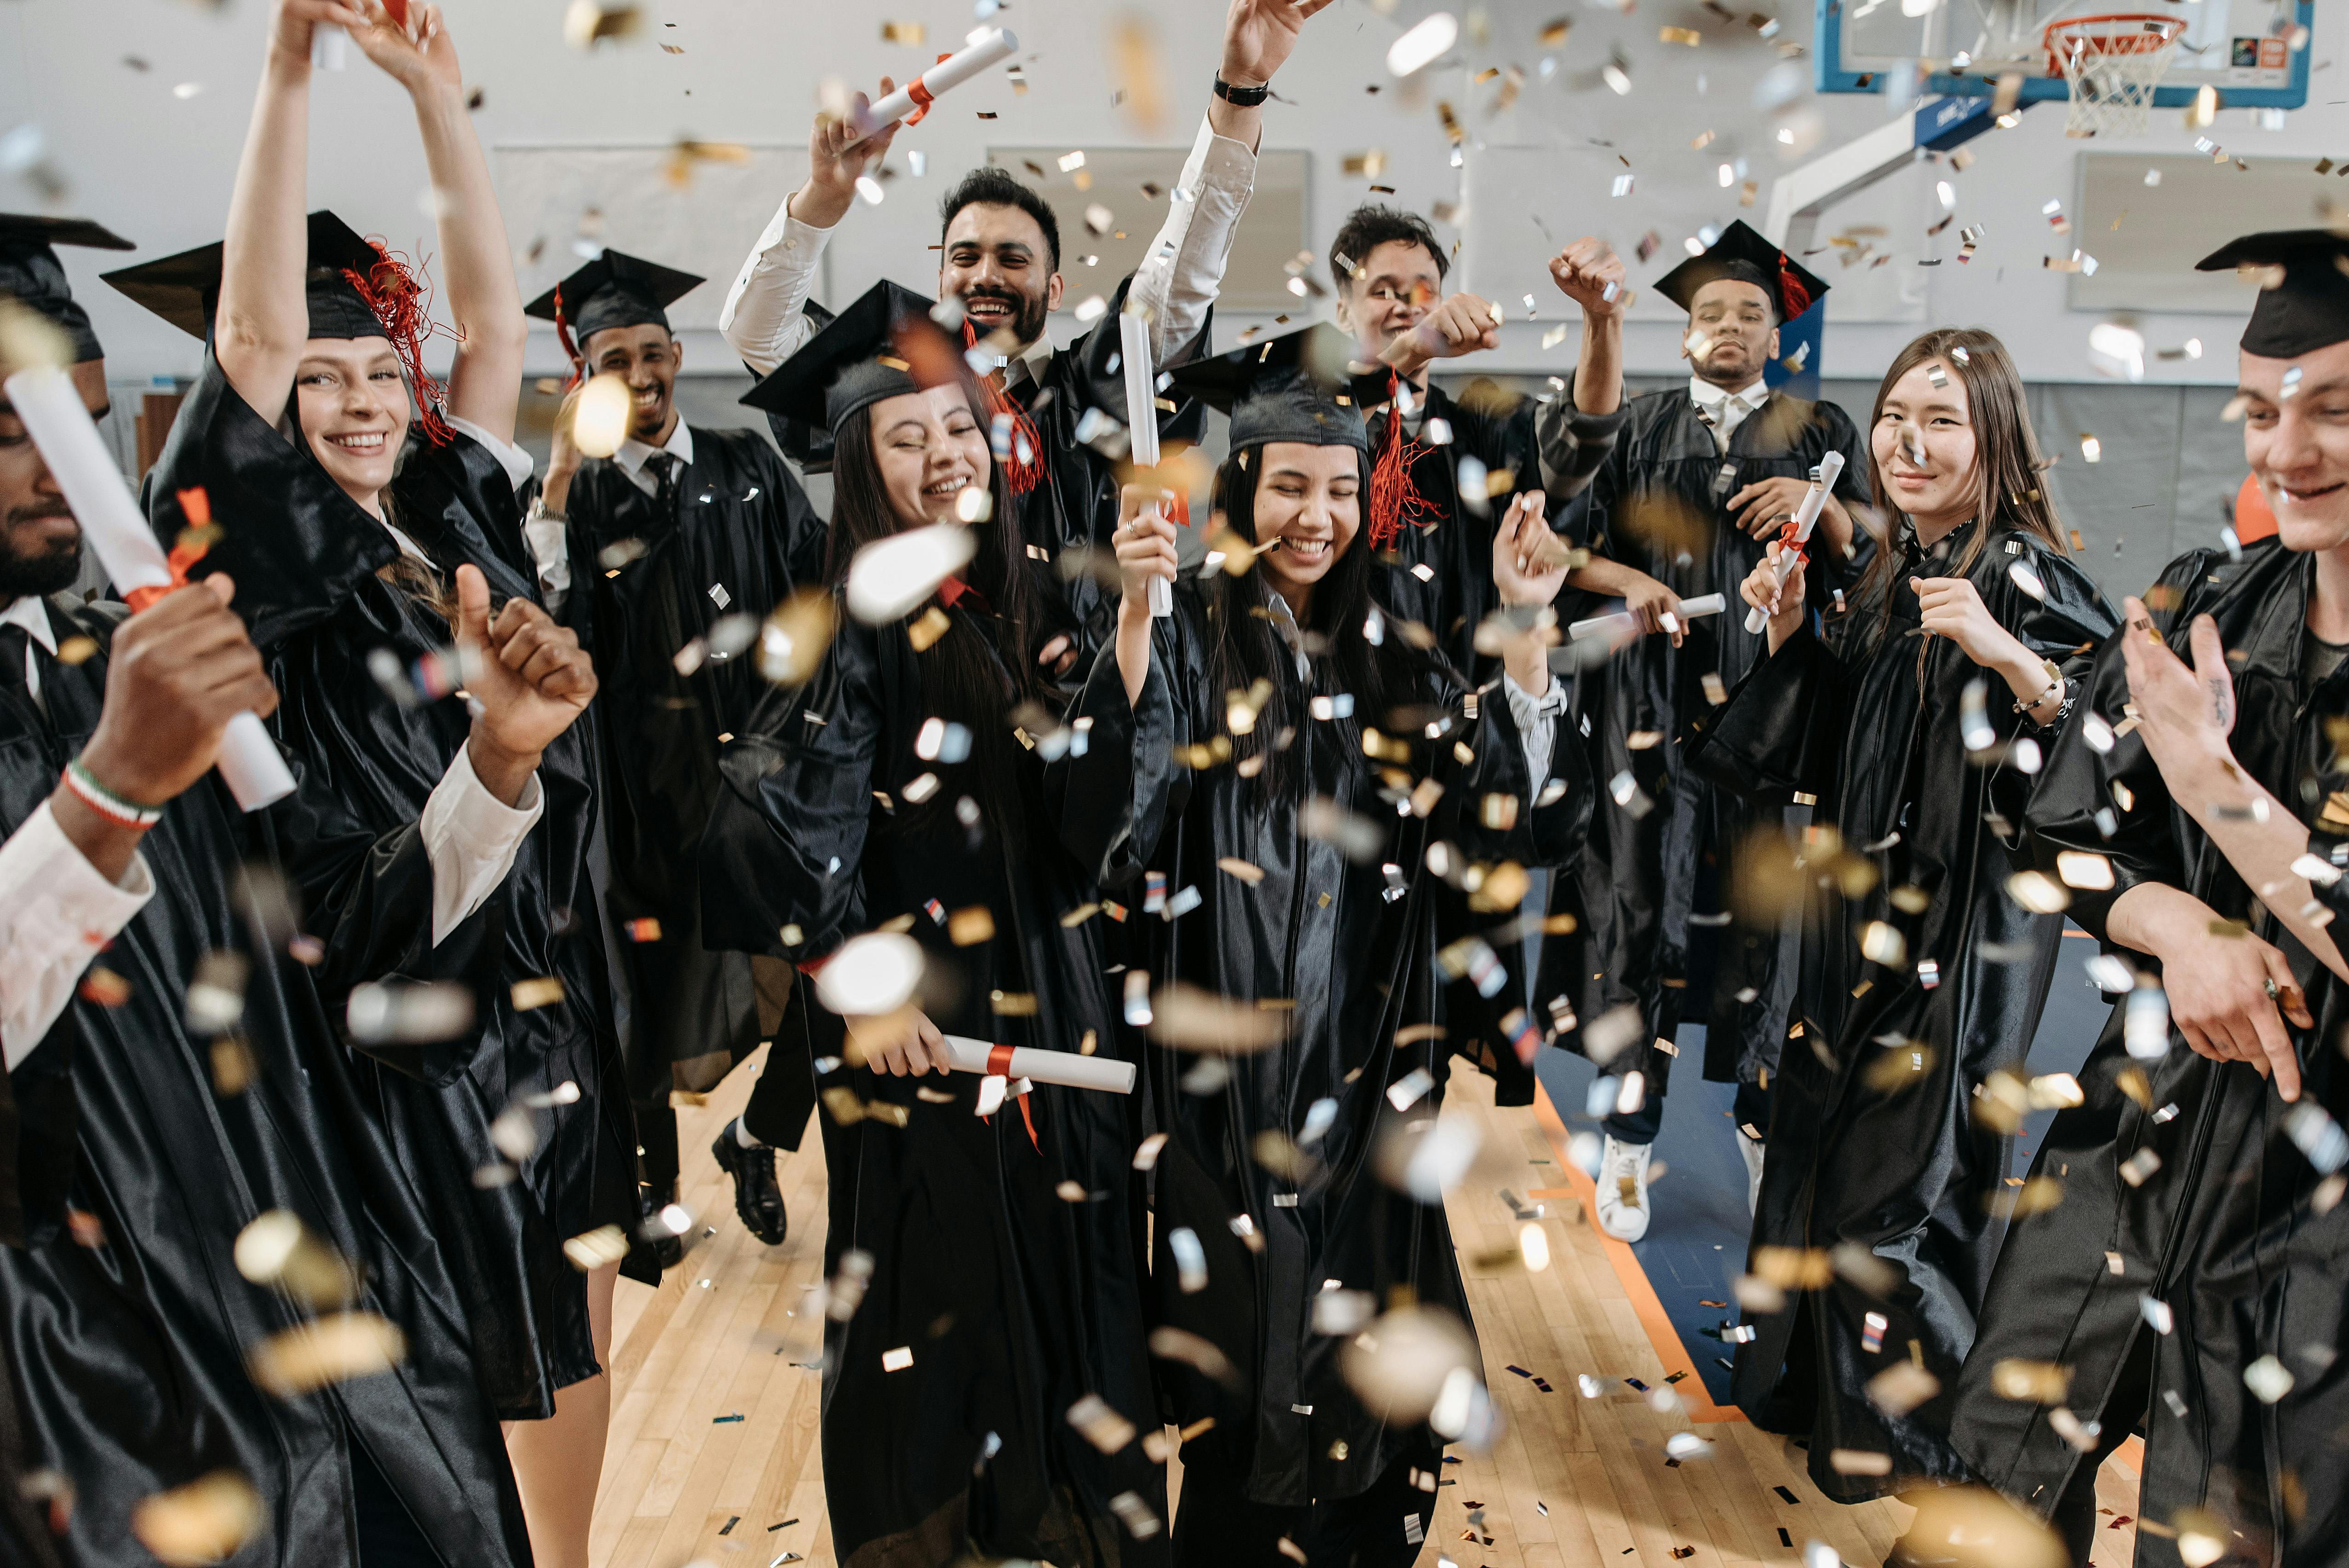 Graduants celebrating | Source: Pexels